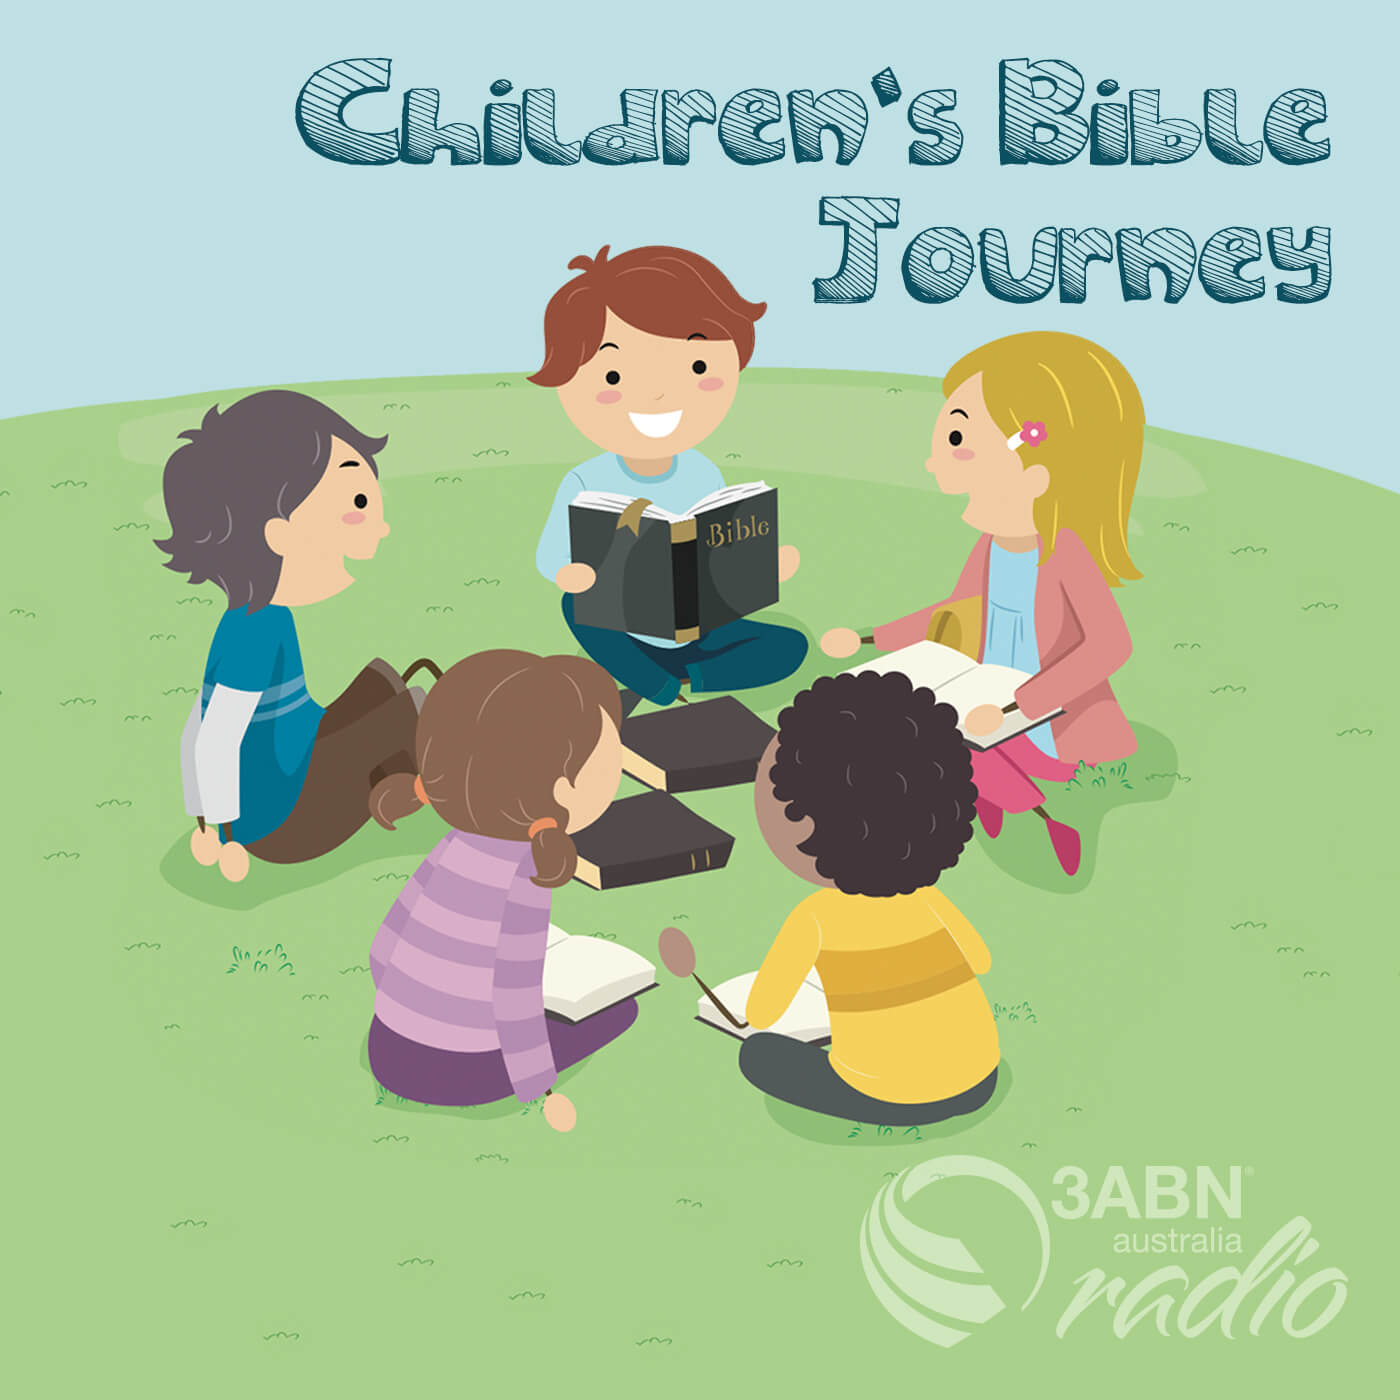 Children's Bible Journey - 2197